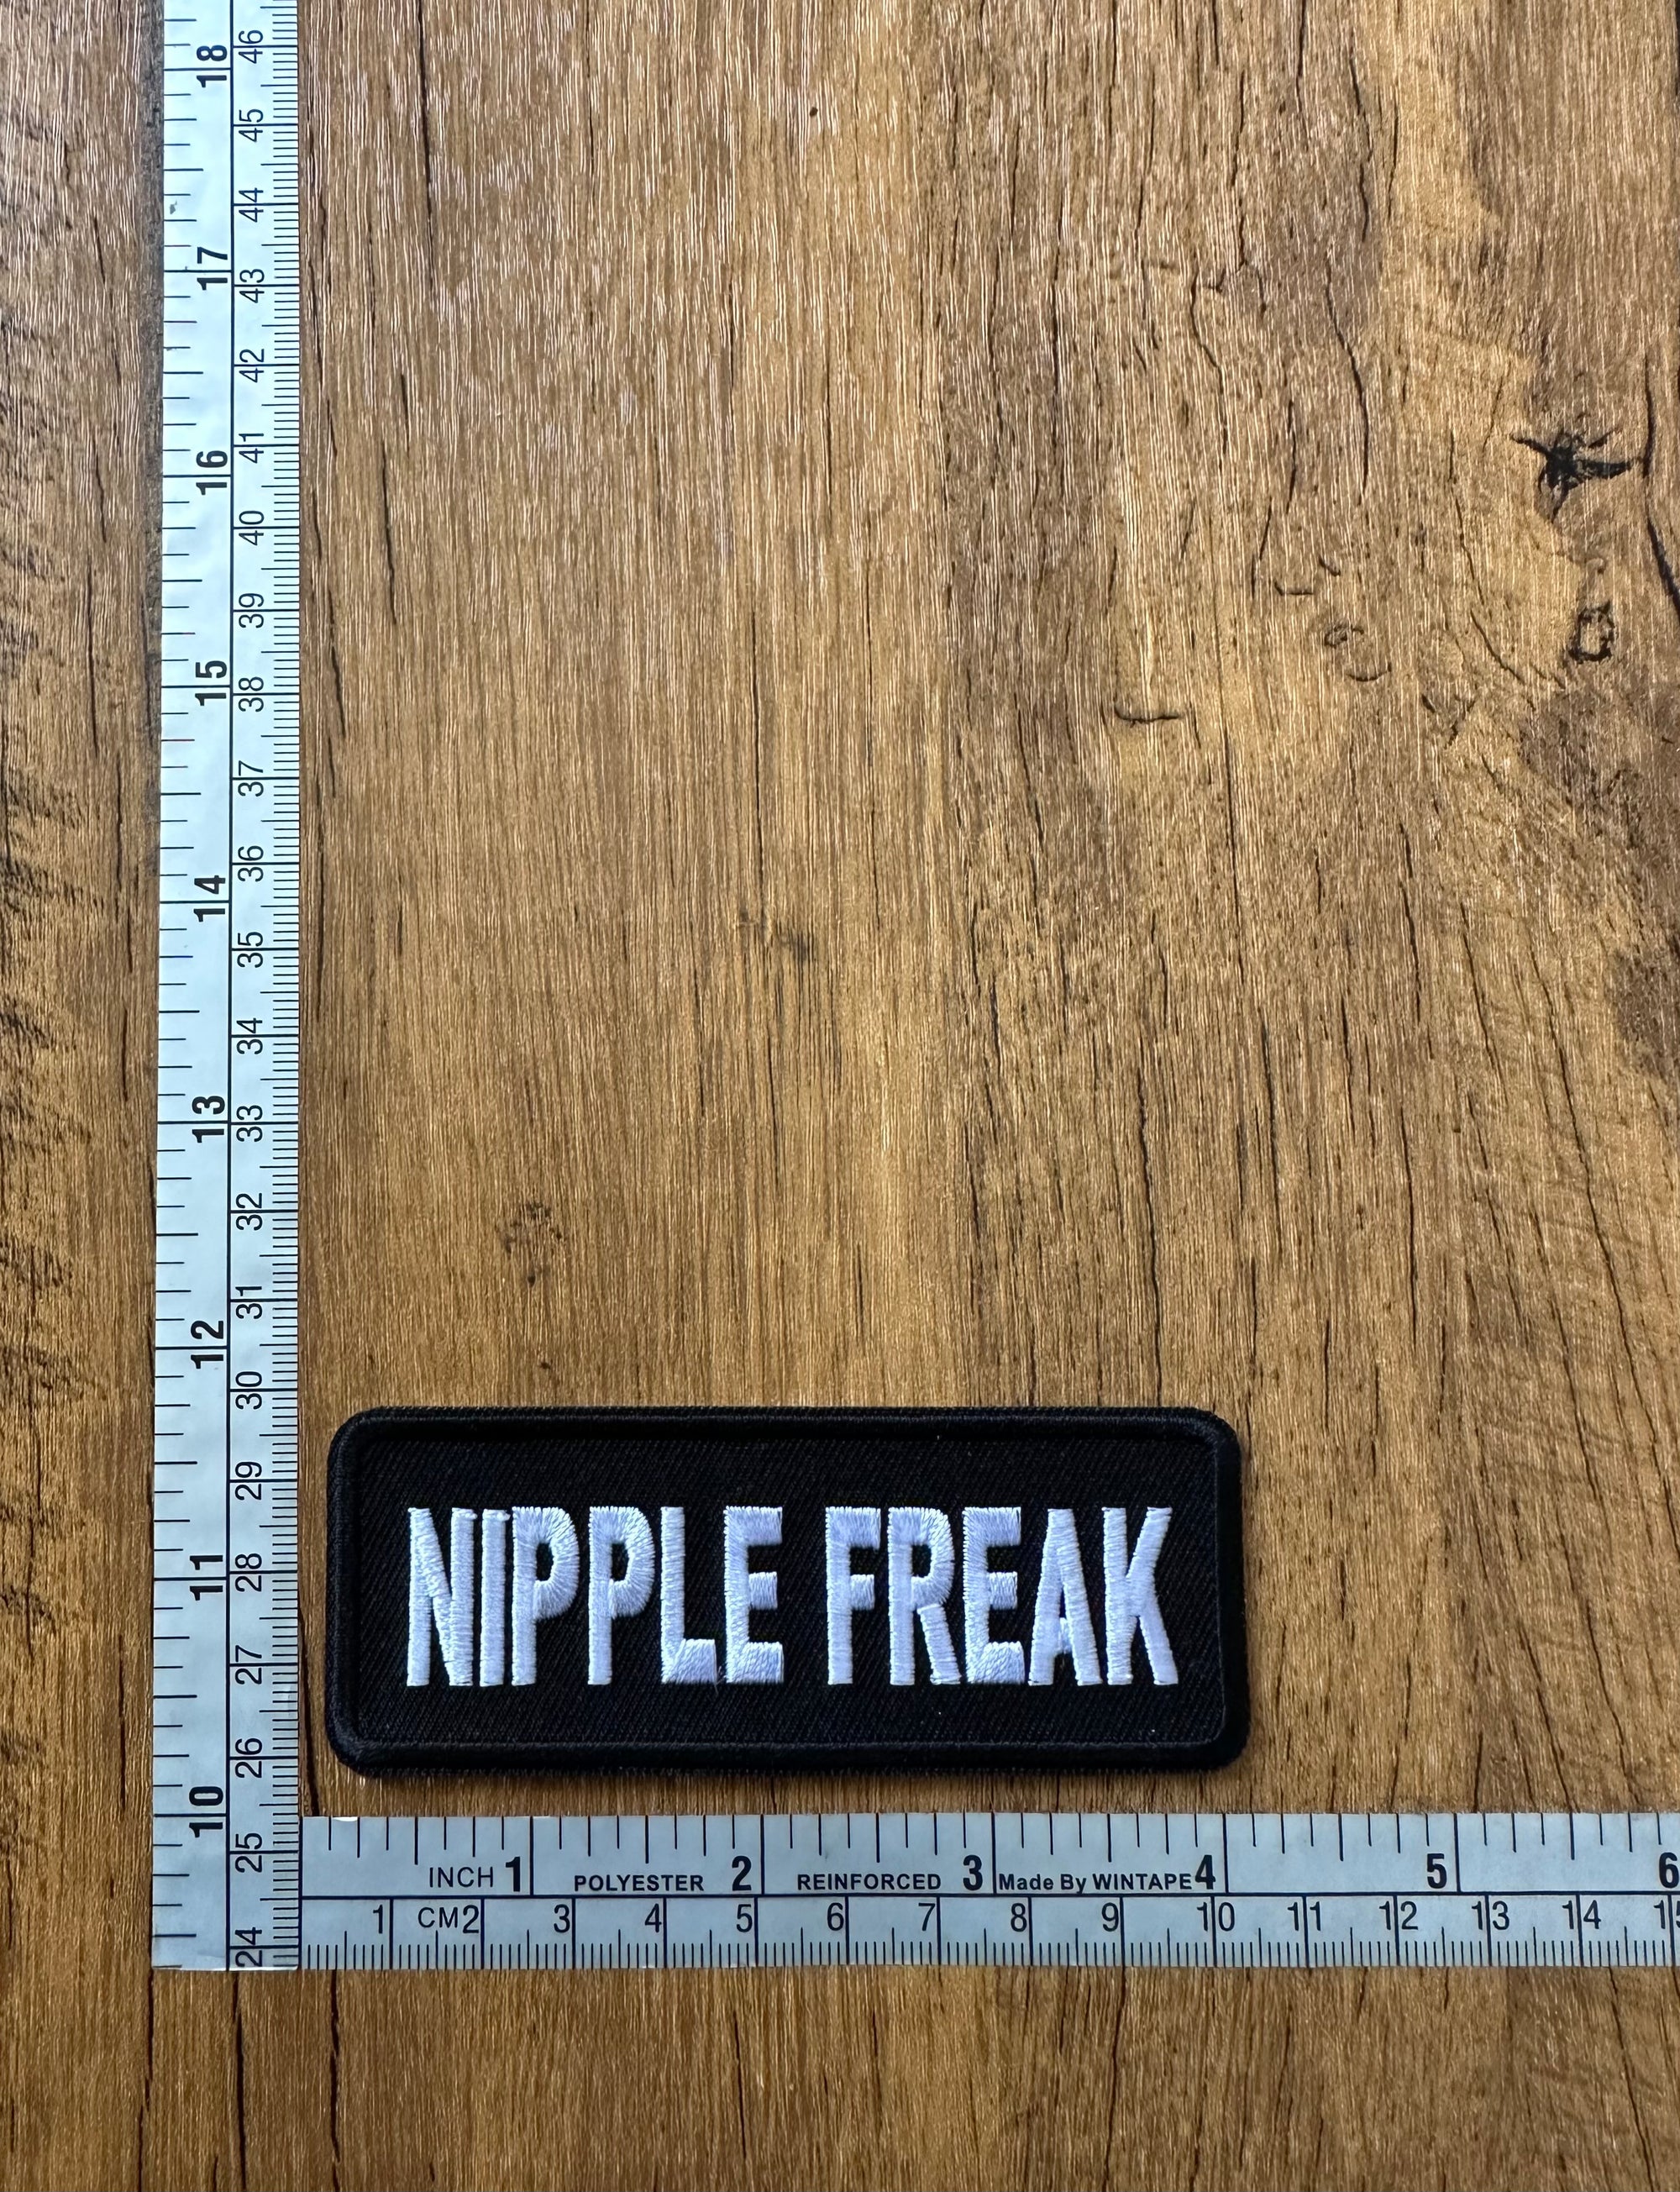 Nipple Freak